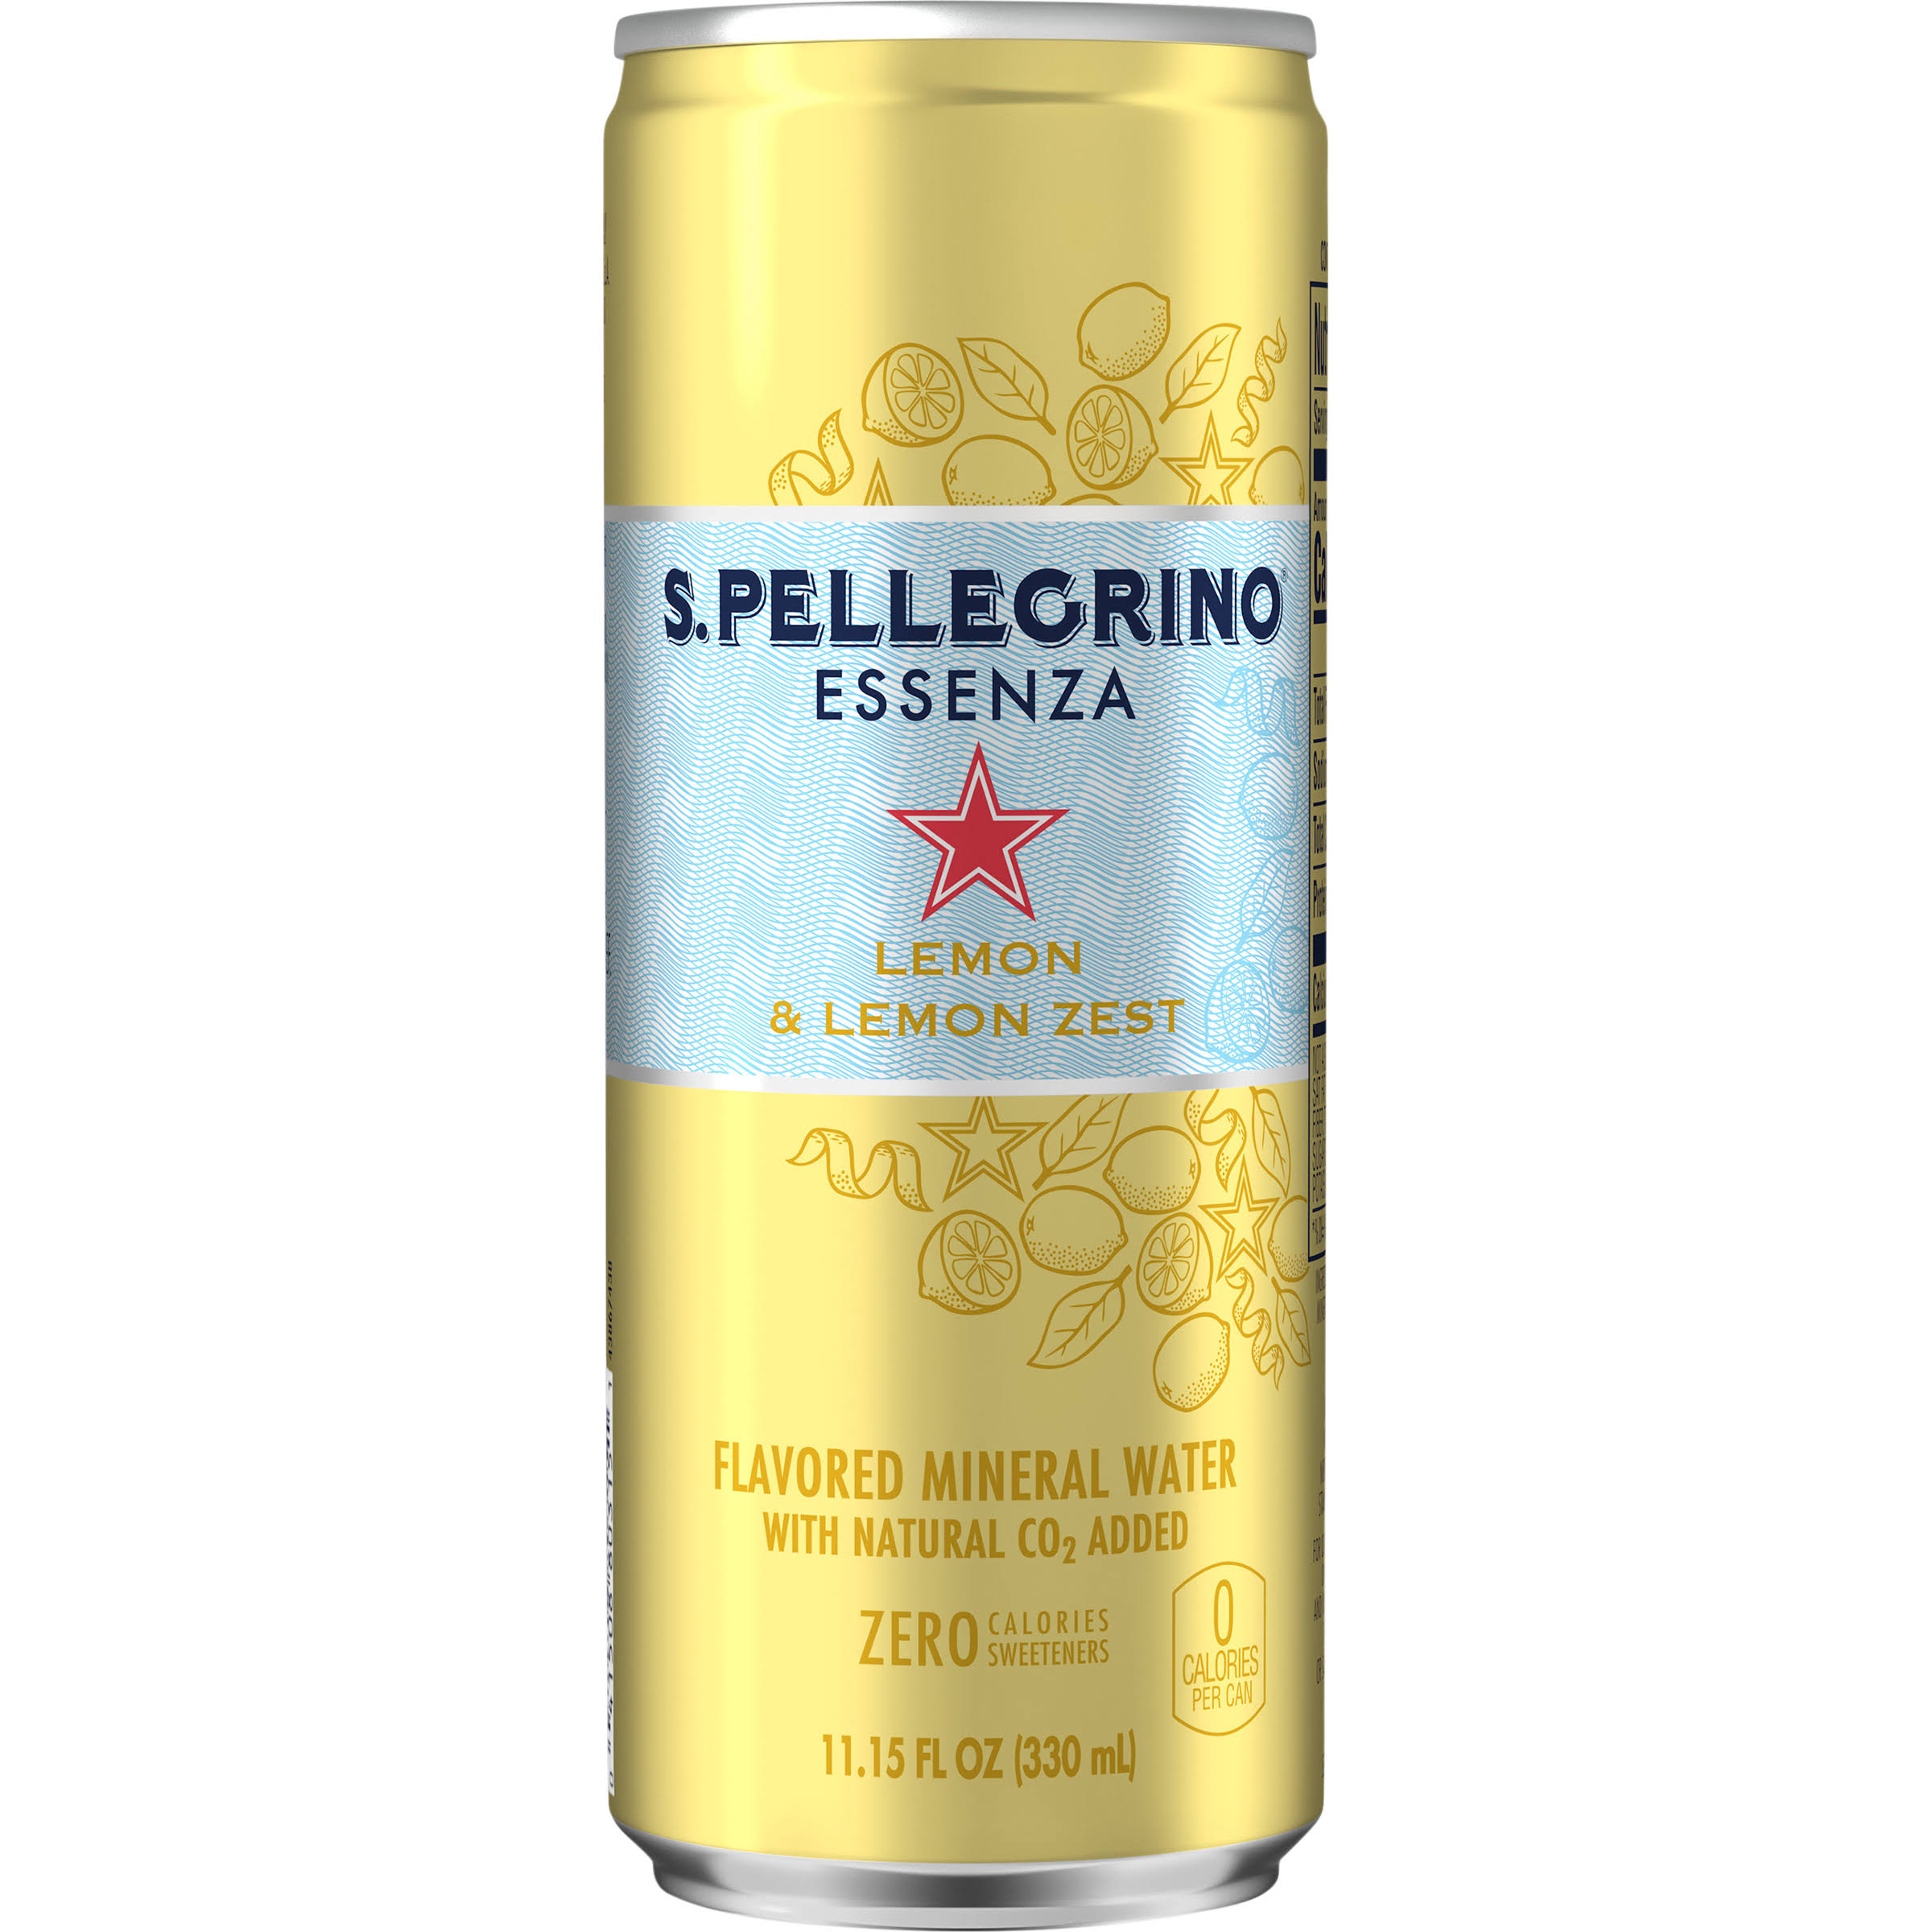 San Pellegrino Essenza Flavored Mineral Water, with Natural CO2 Added, Lemon & Lemon Zest - 11.15 fl oz